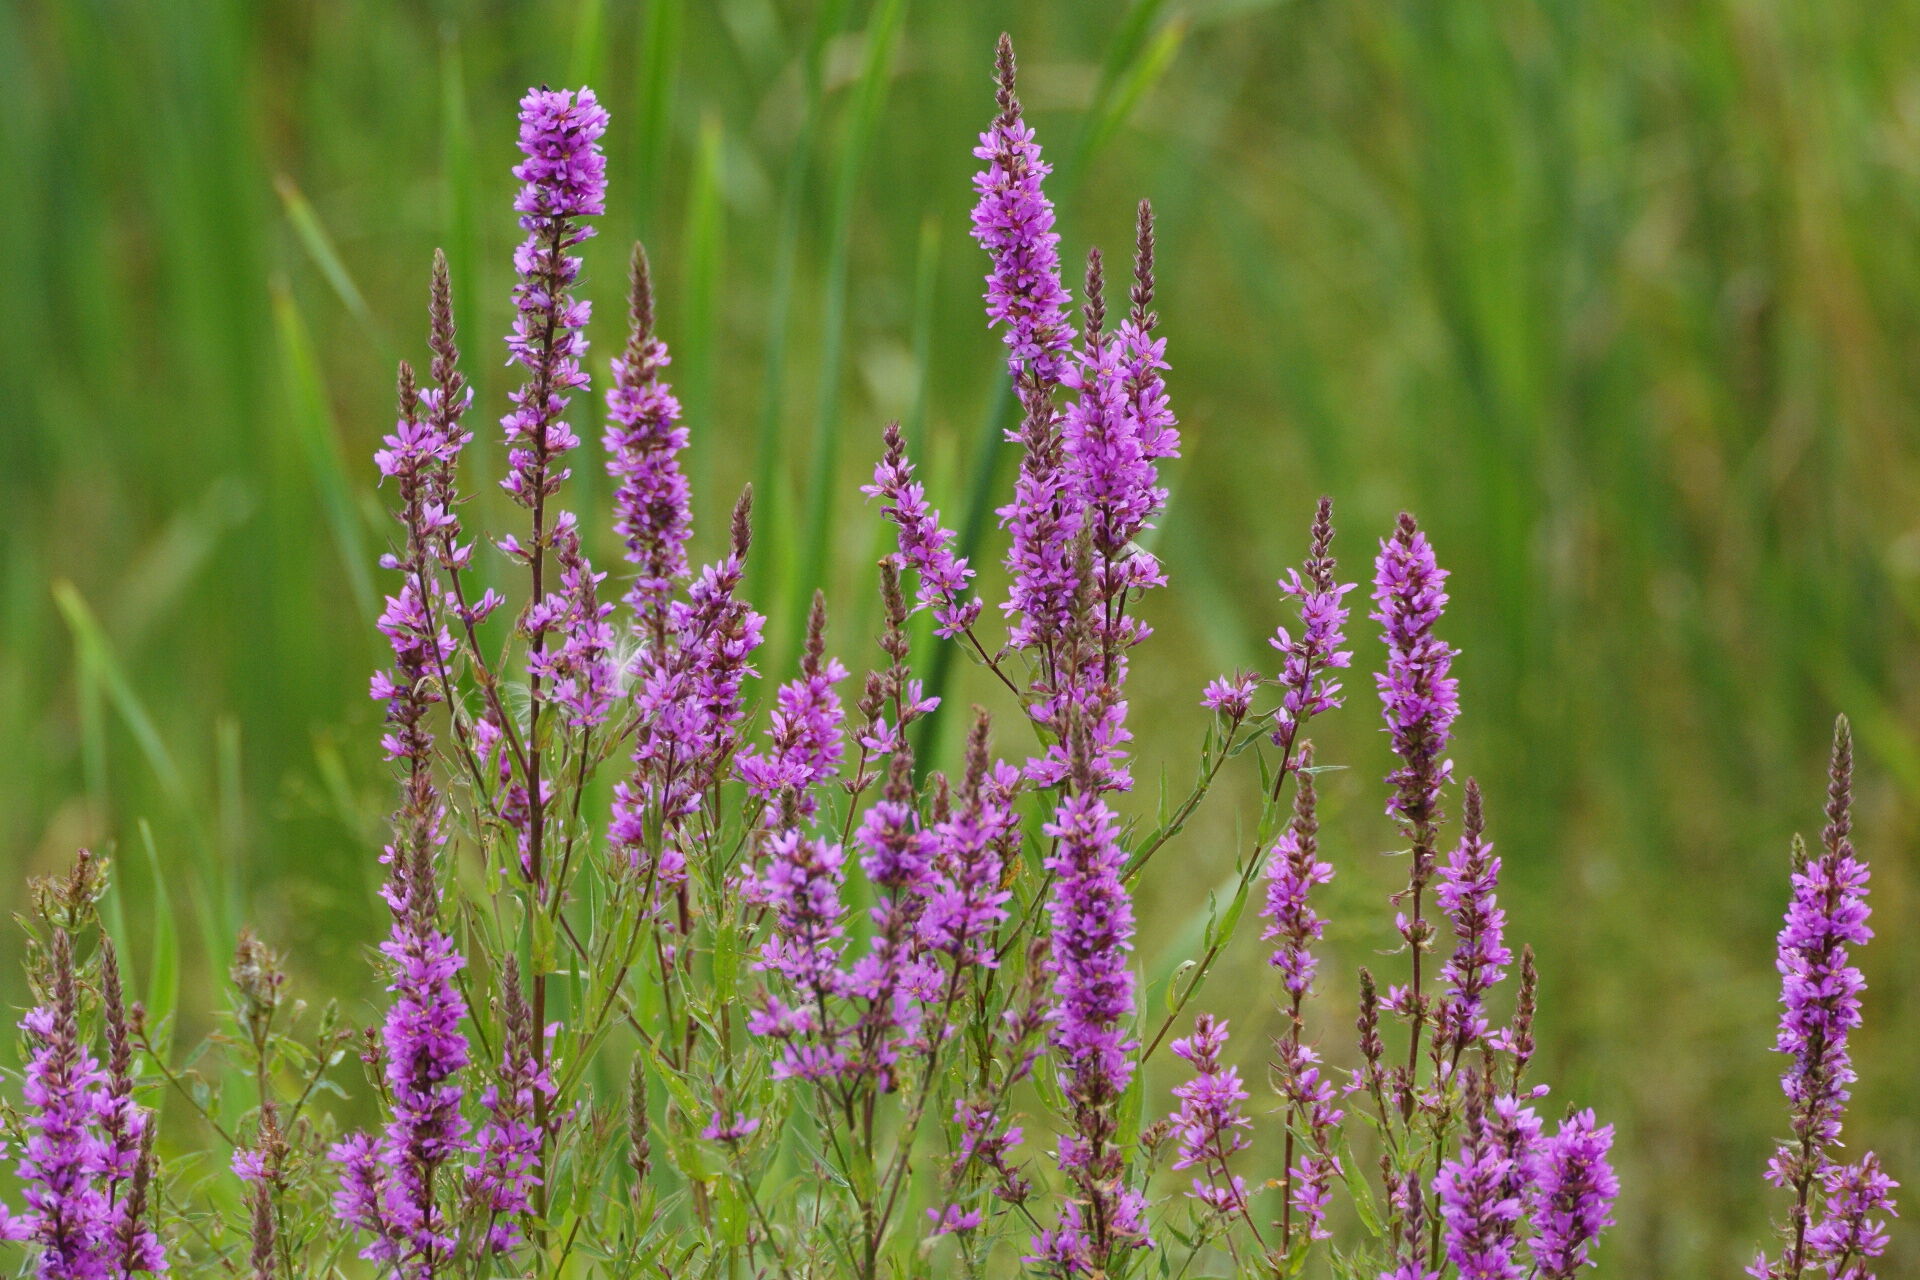 Purple loosestrife is an invasive wetland plant